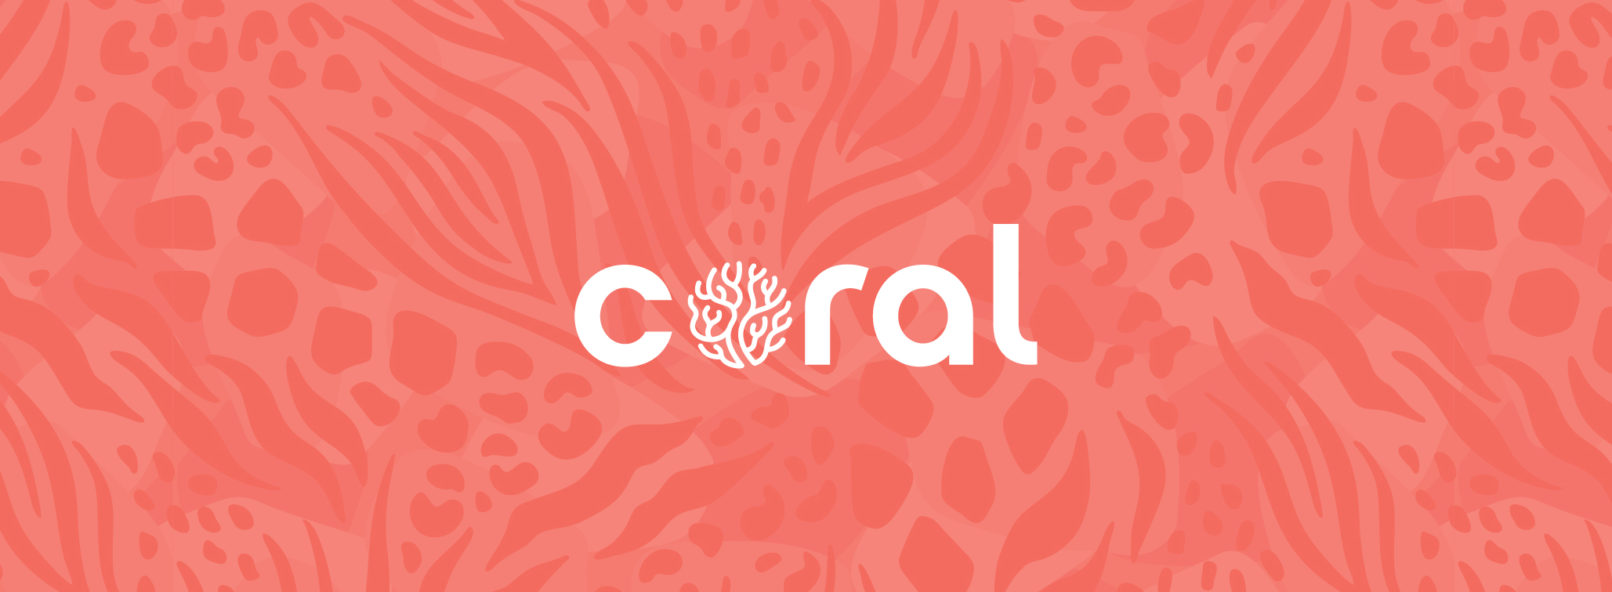 Research Lab Branding San Diego: CORAL logo on a custom pattern